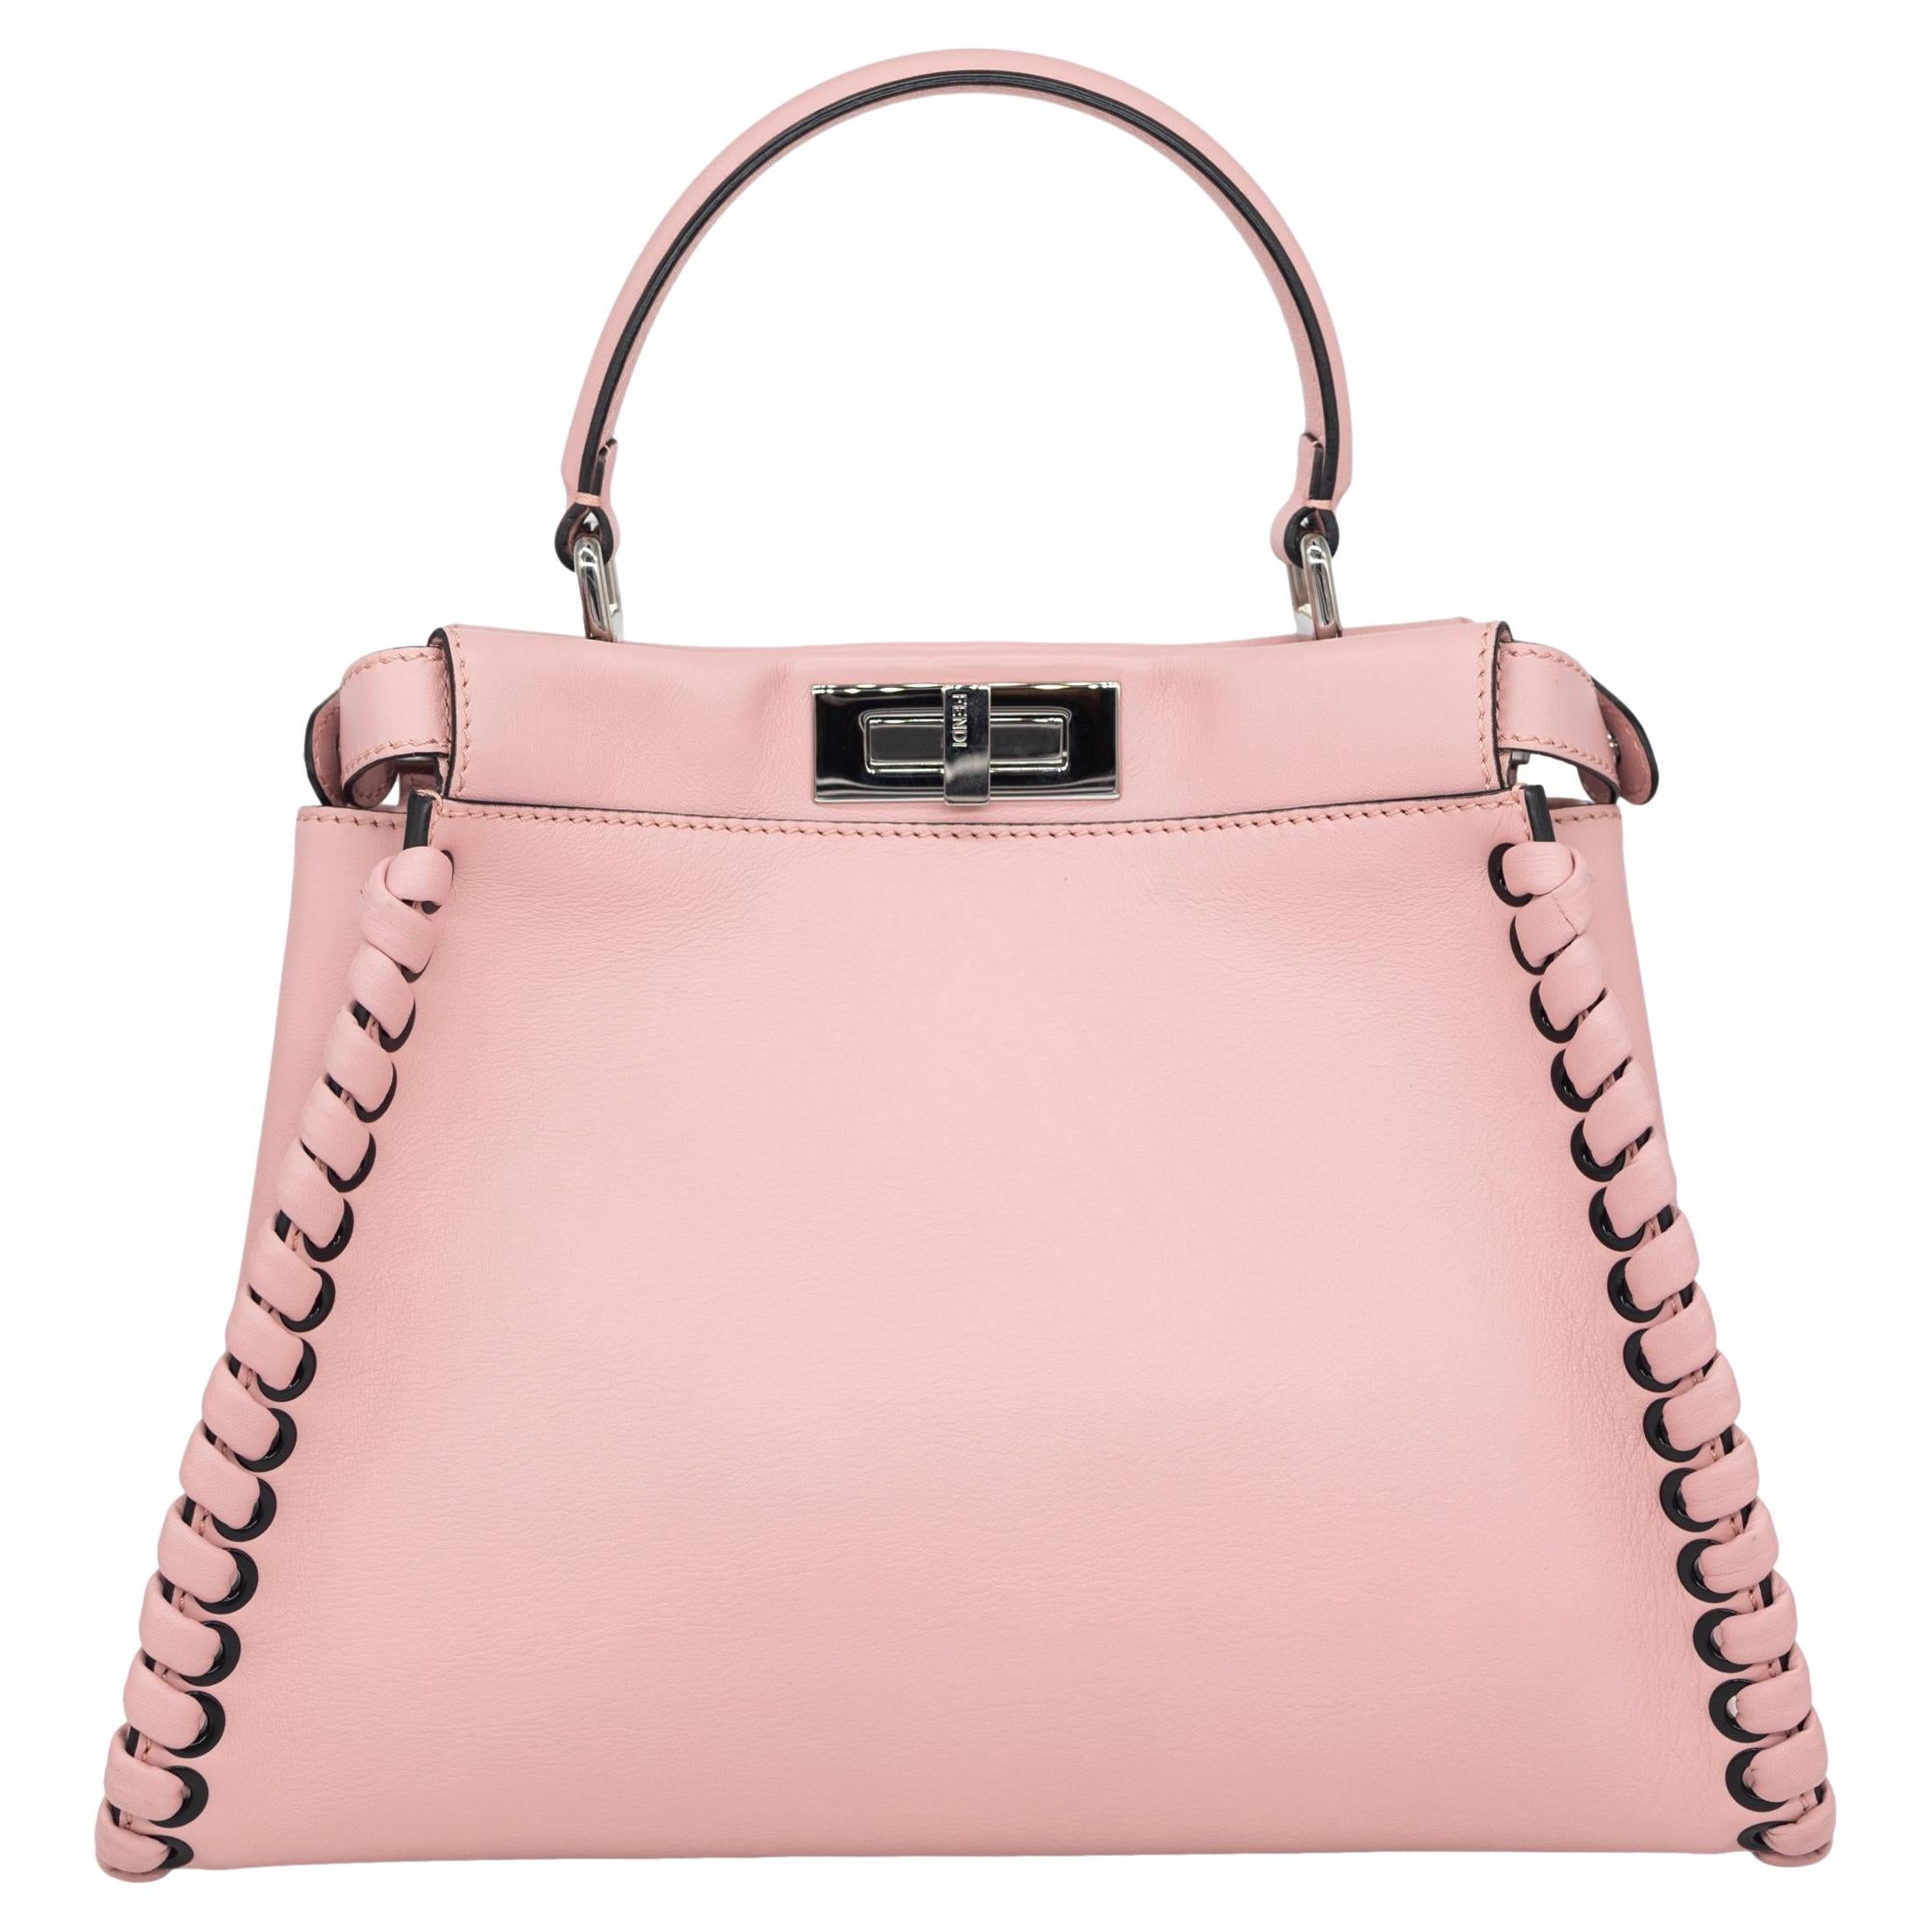 Fendi Woven Pink Leather Medium Whipstitched Peekaboo Top Handle Shoulder Bag